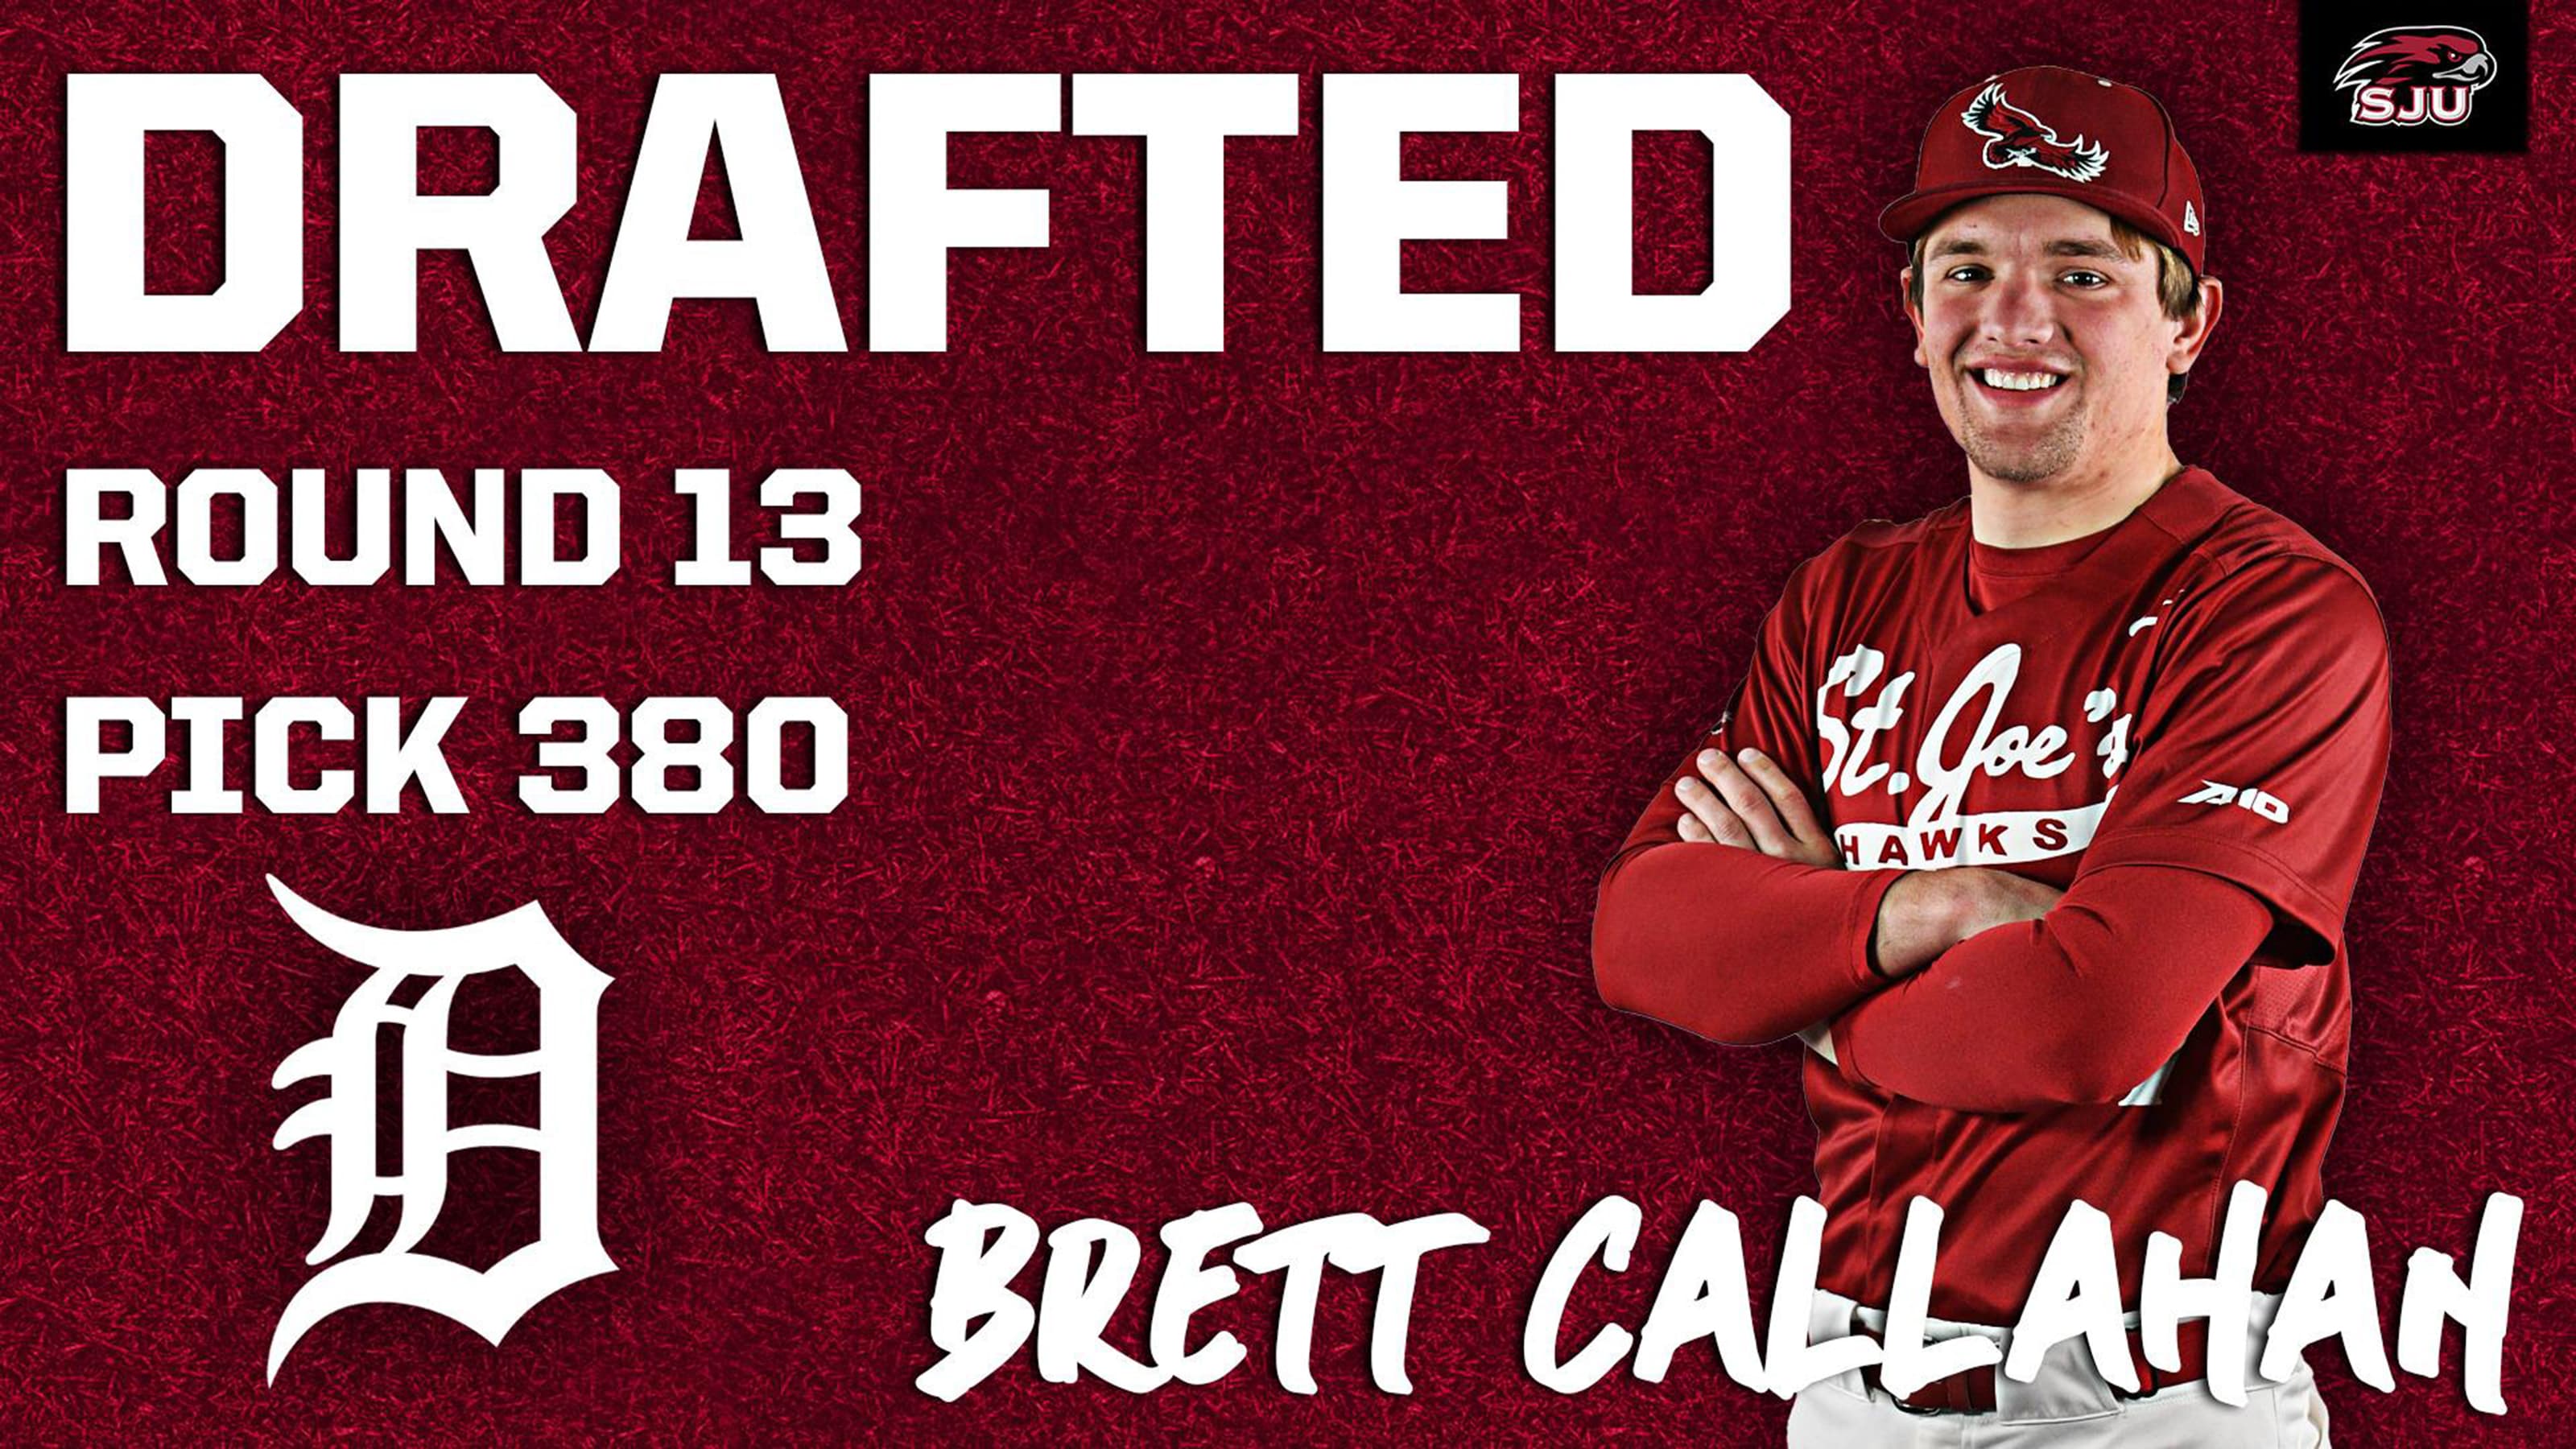 Saint Joseph's University's Brett Callahan drafted to MLB